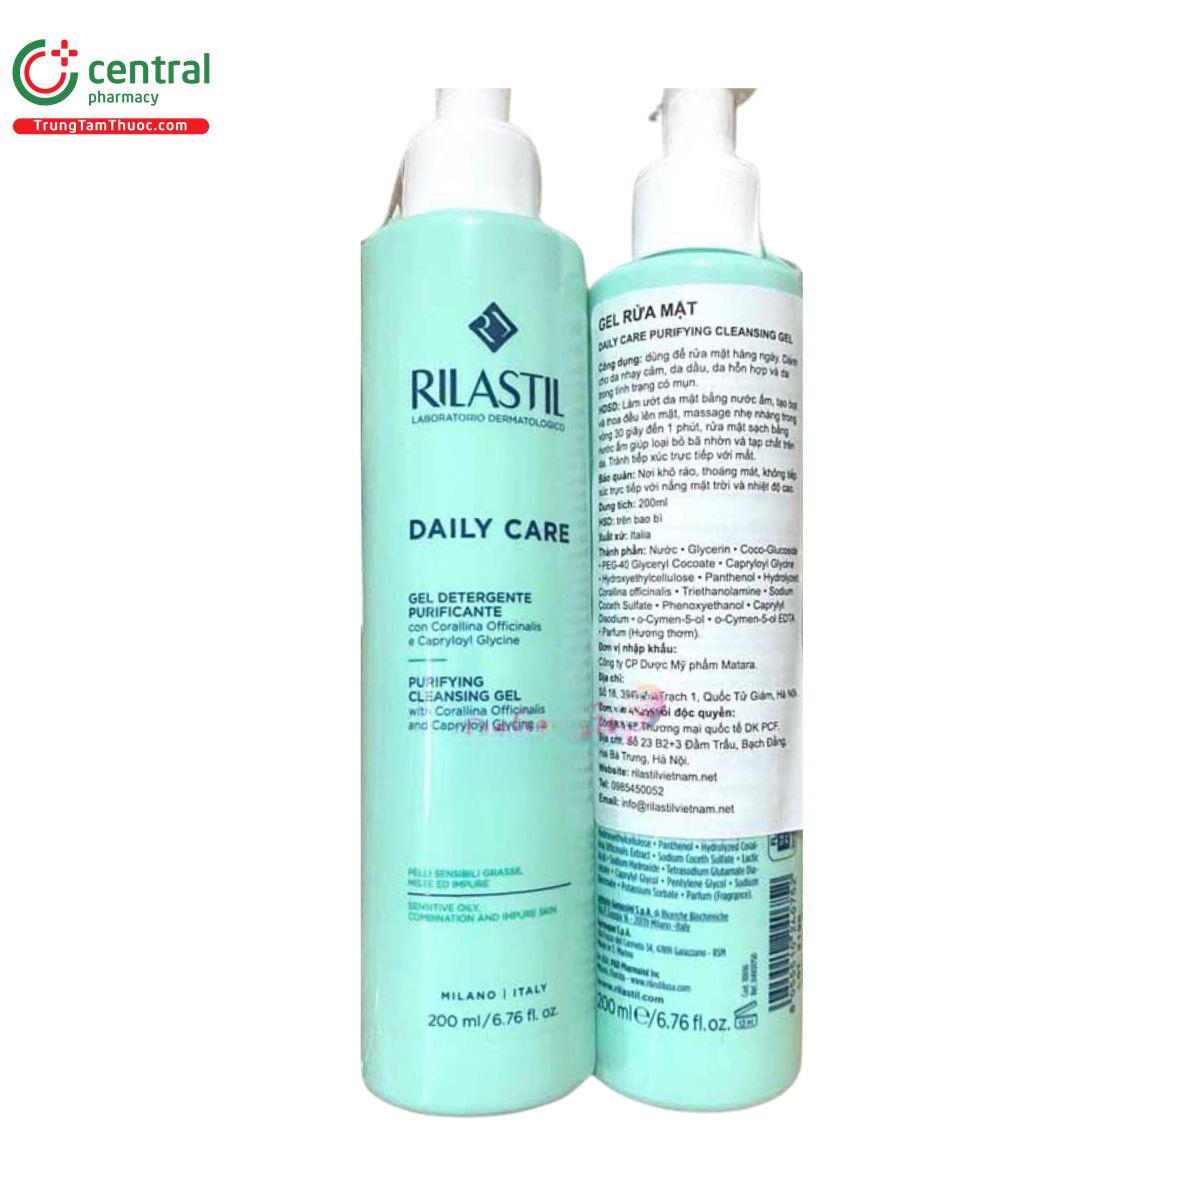 rilastil daily care purifying cleansing gel 2 K4323